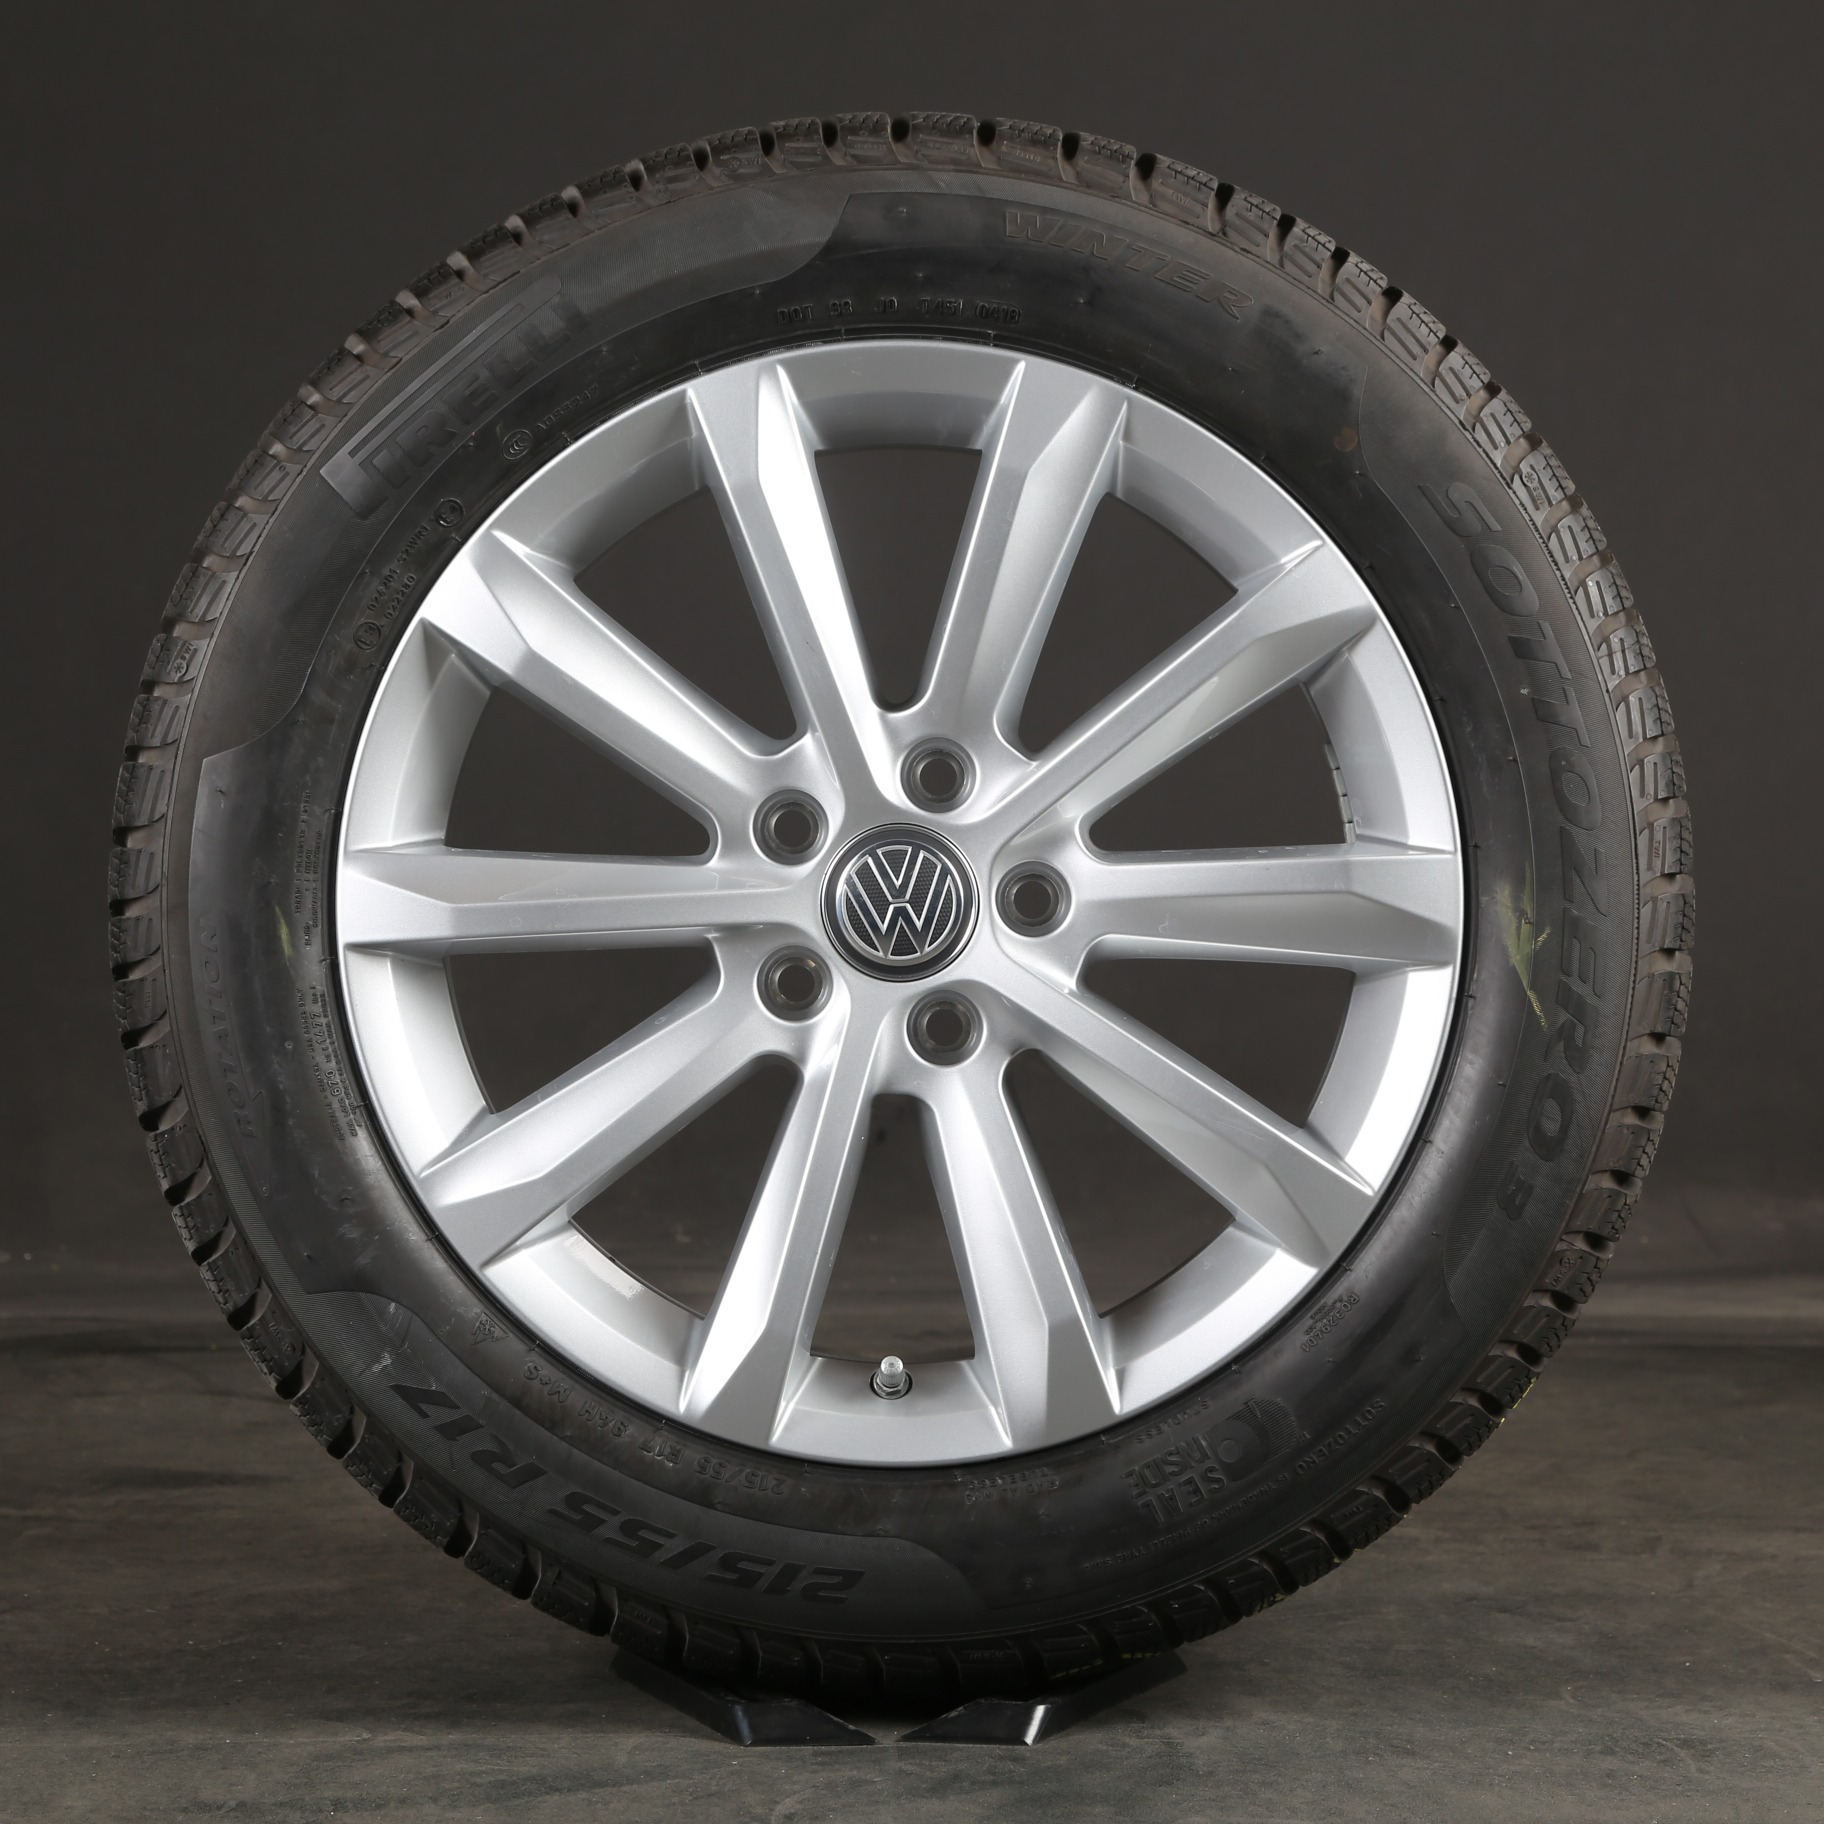 17 pulgadas ruedas de invierno original VW Passat B8 Helsinki 3G0601025C neumáticos de invierno